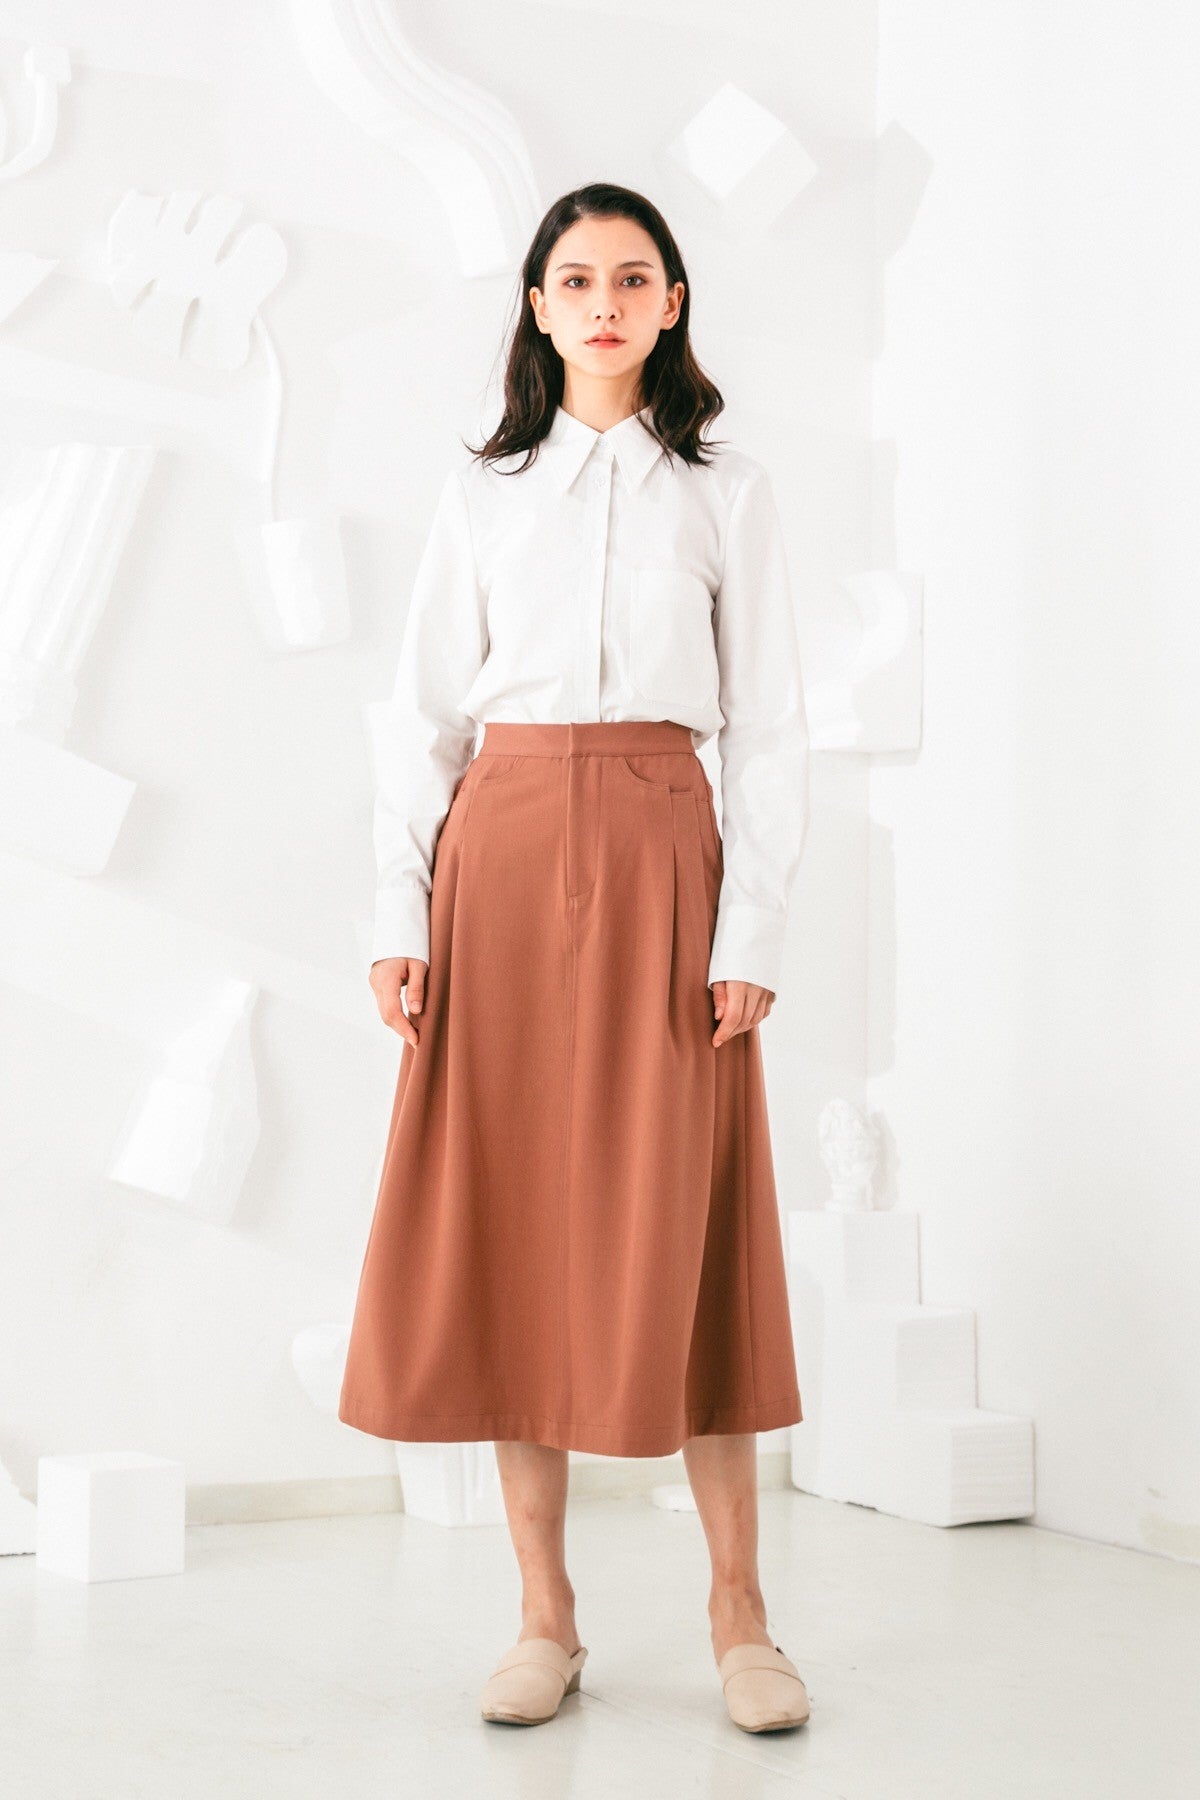 SKYE San Francisco SF shop ethical sustainable modern minimalist elegant quality women clothing fashion brand Aurelie Midi Skirt Light Brown 4